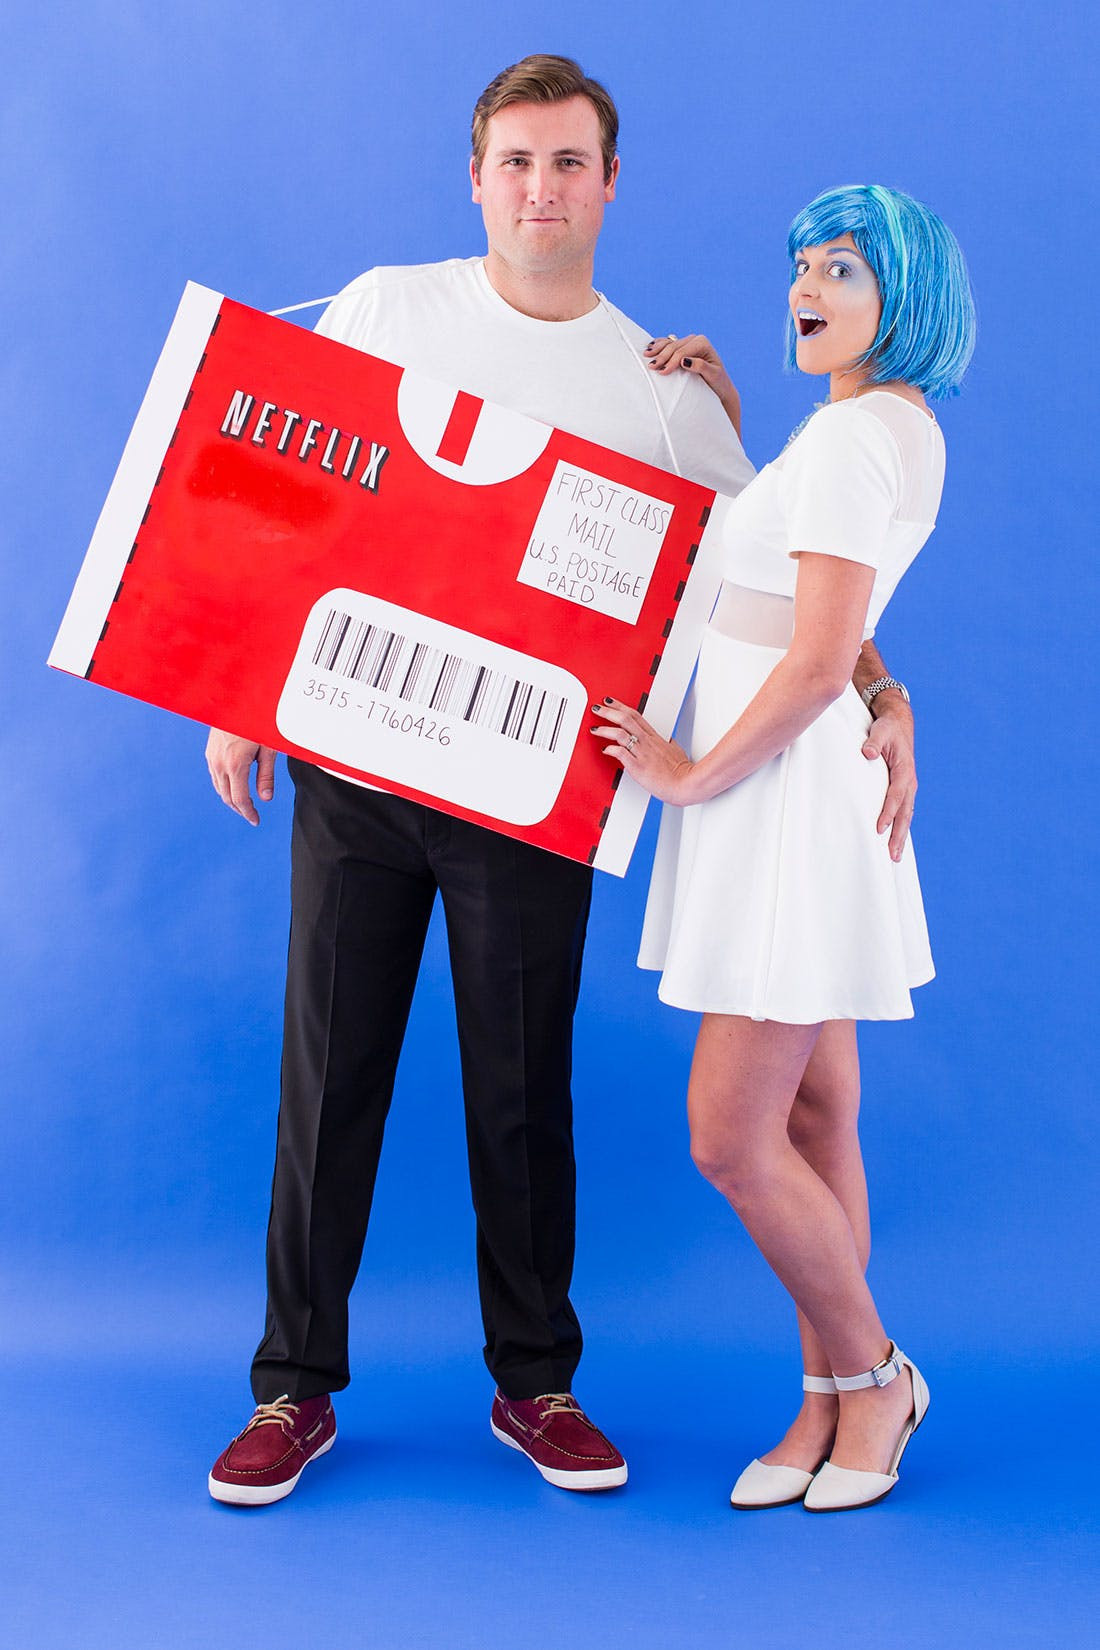 Best ideas about Best DIY Couples Costumes
. Save or Pin The 5 Best DIY Couples’ Costumes for Halloween 2015 Now.